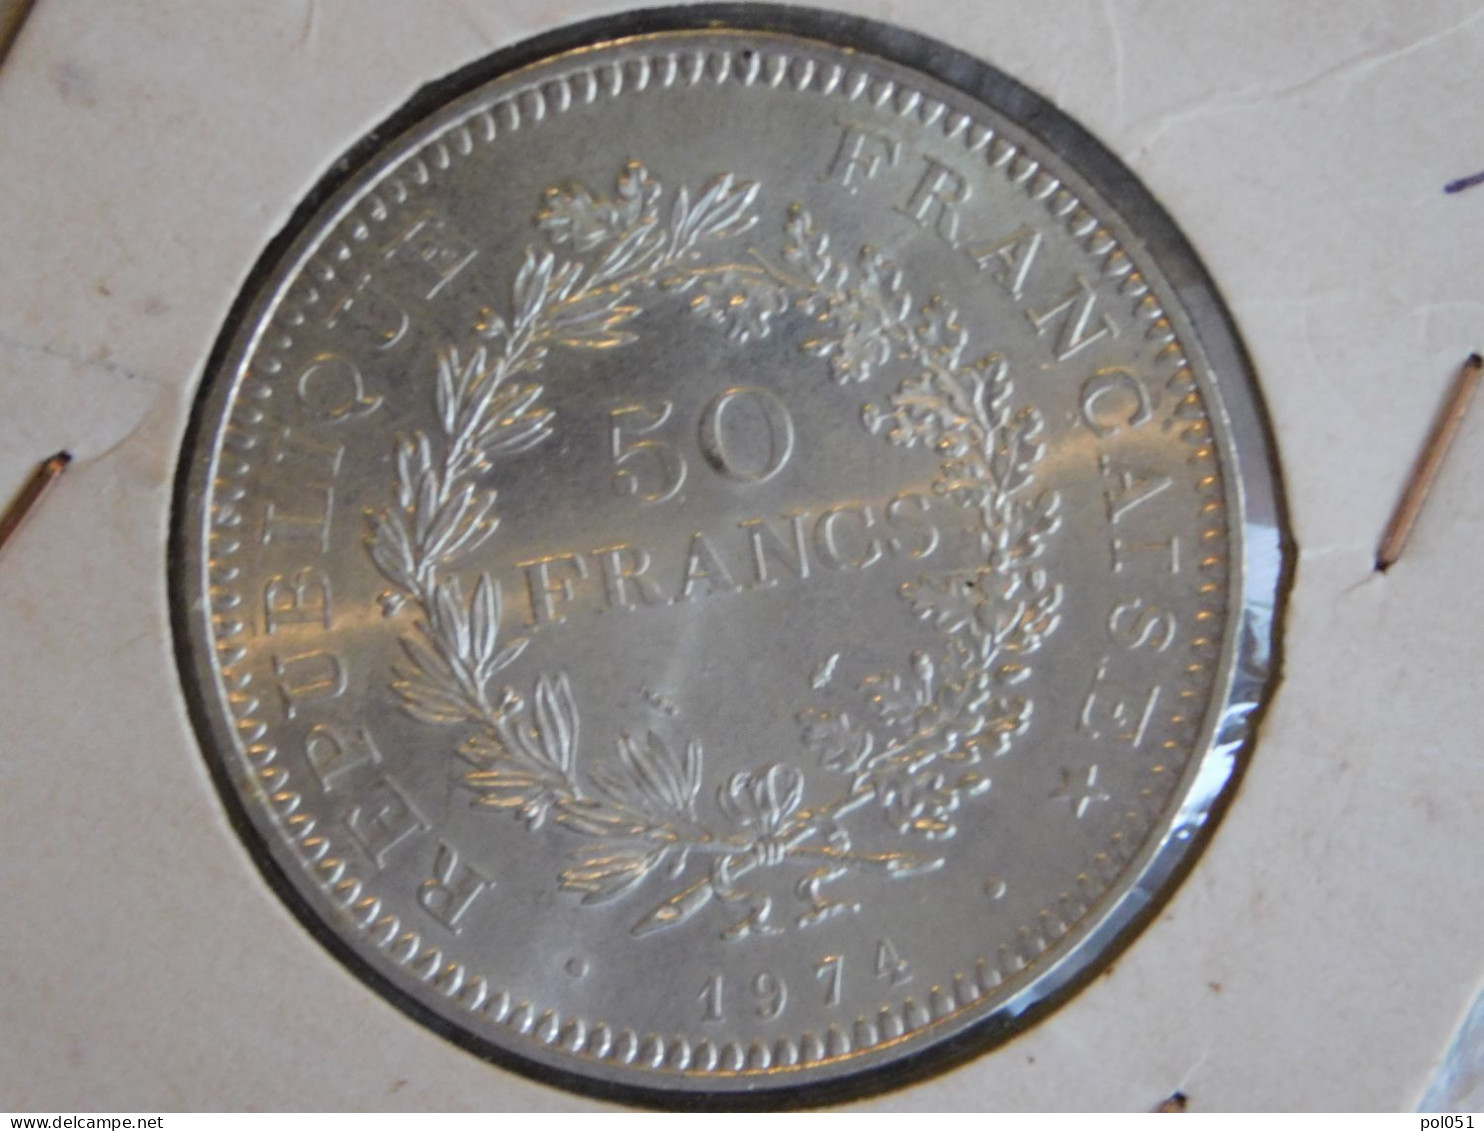 France 50 Francs 1974 HERCULE (1071) Argent Silver - 50 Francs